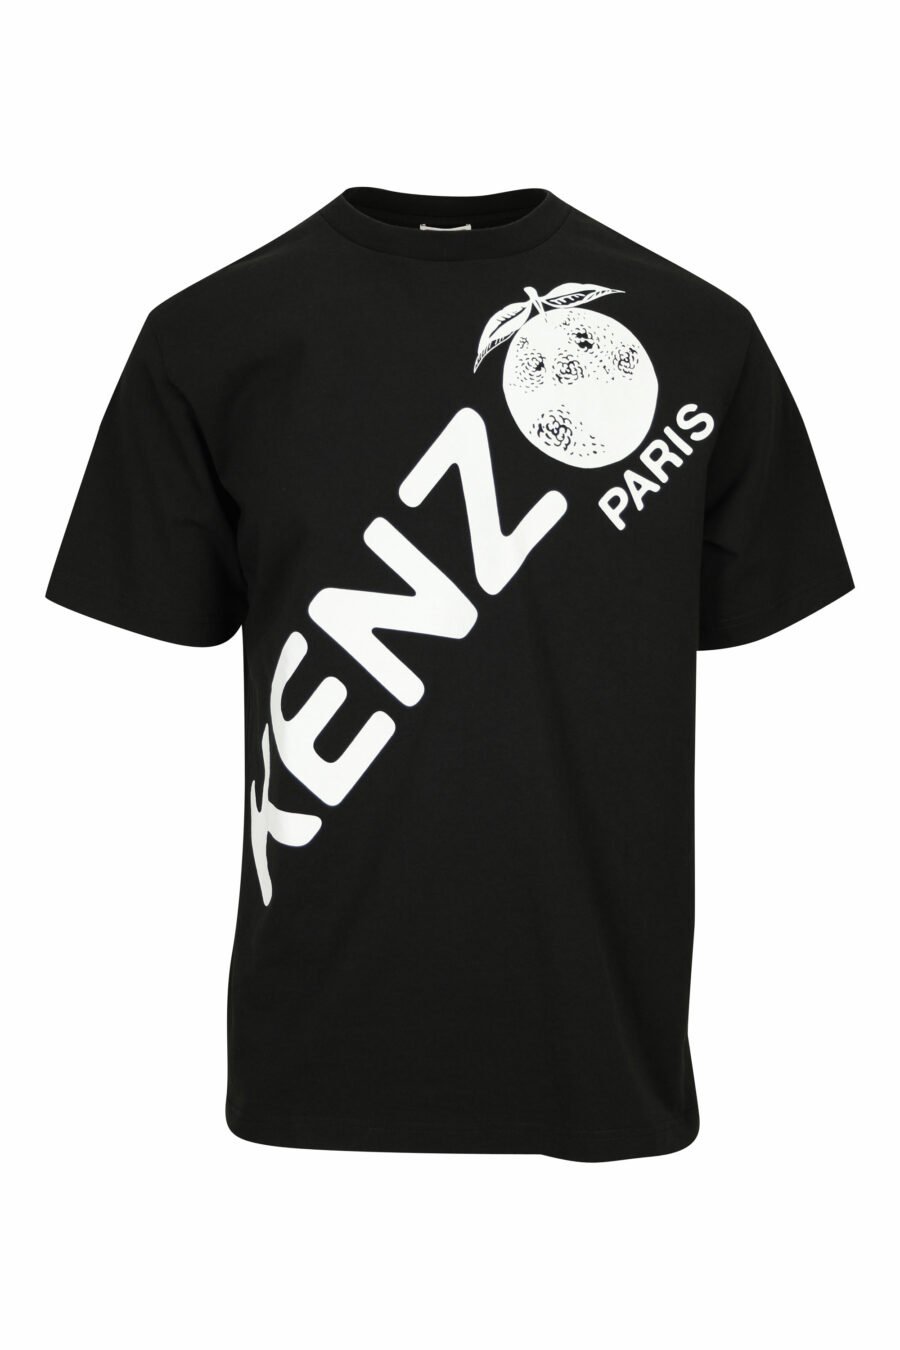 Schwarzes T-Shirt mit diagonalem Maxilogo "kenzo orange" - 3612230626997